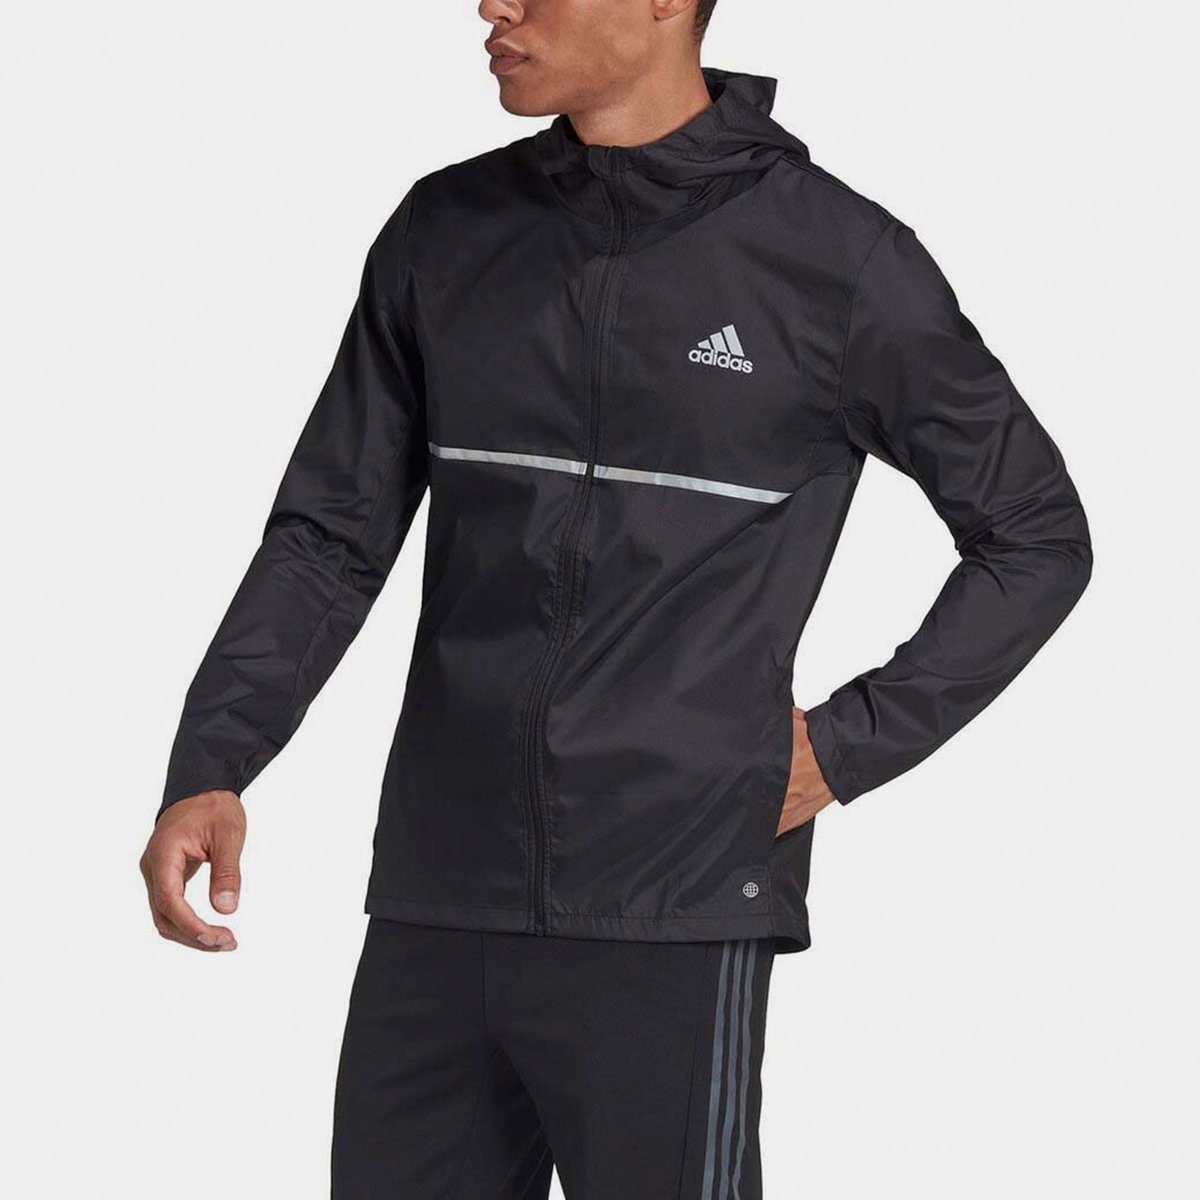 Running Sweatshop United Kingdom Jacket offer